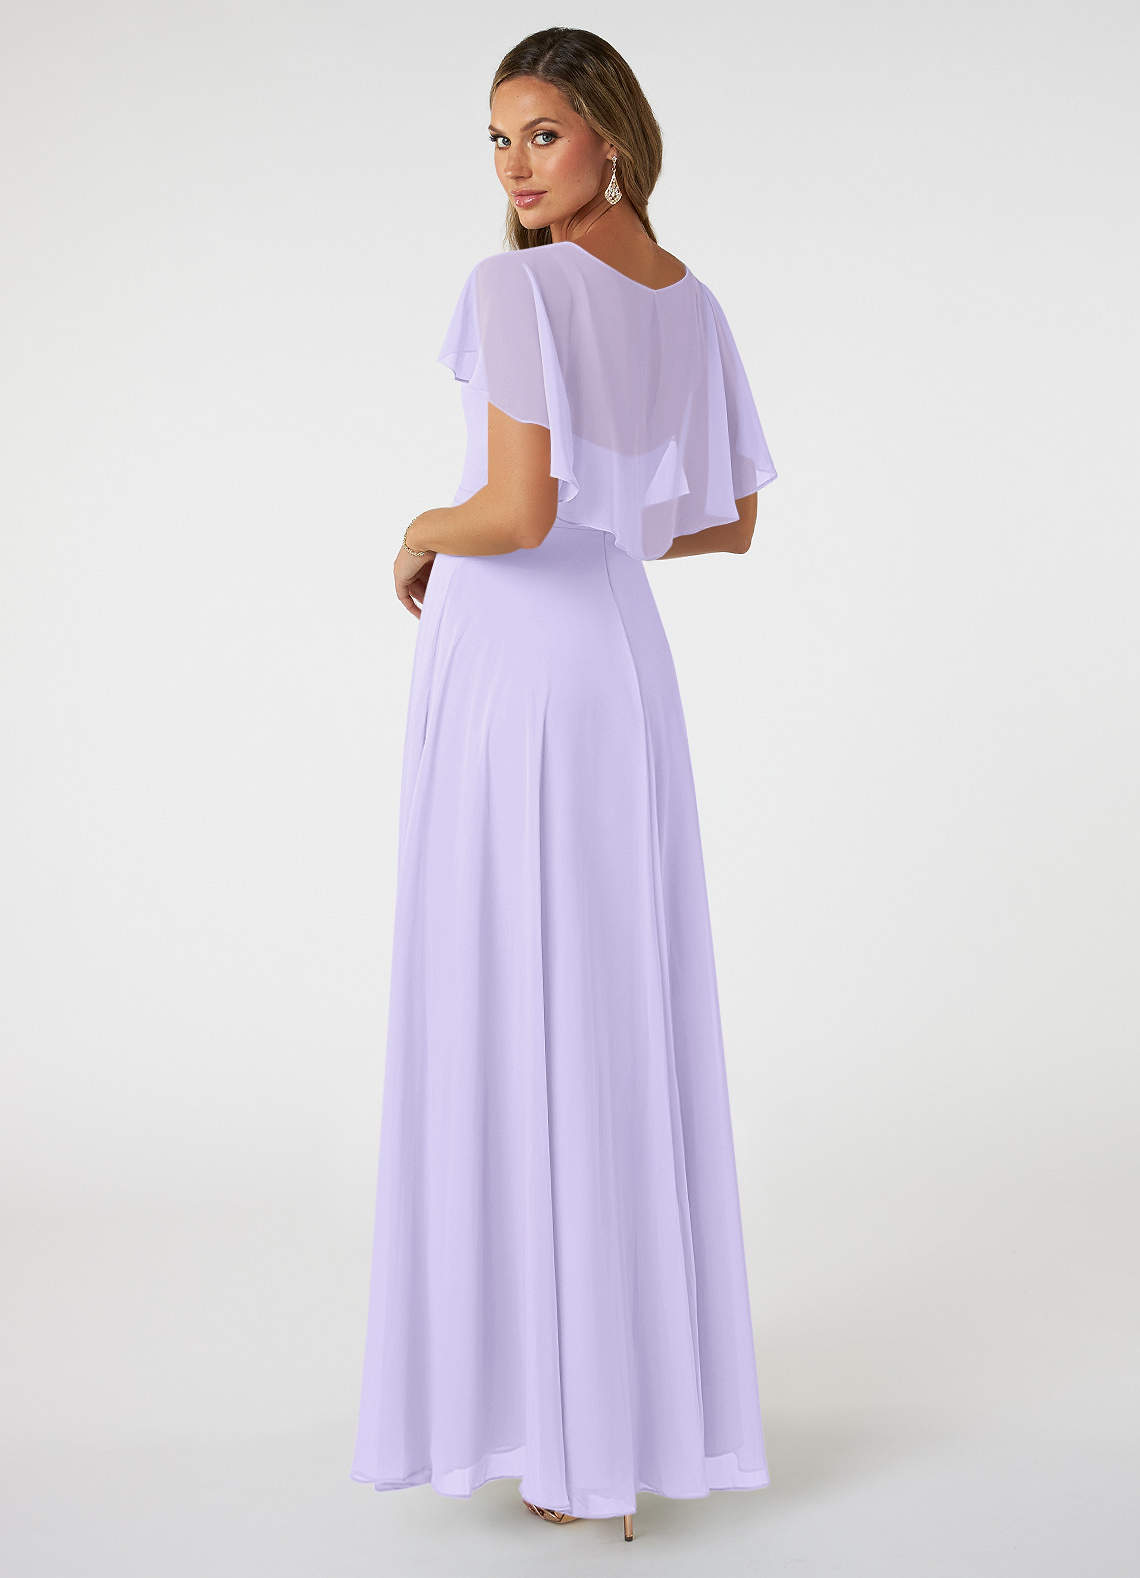 Azazie Jamie Bridesmaid Dresses A-Line Chiffon Floor-Length Dress image1